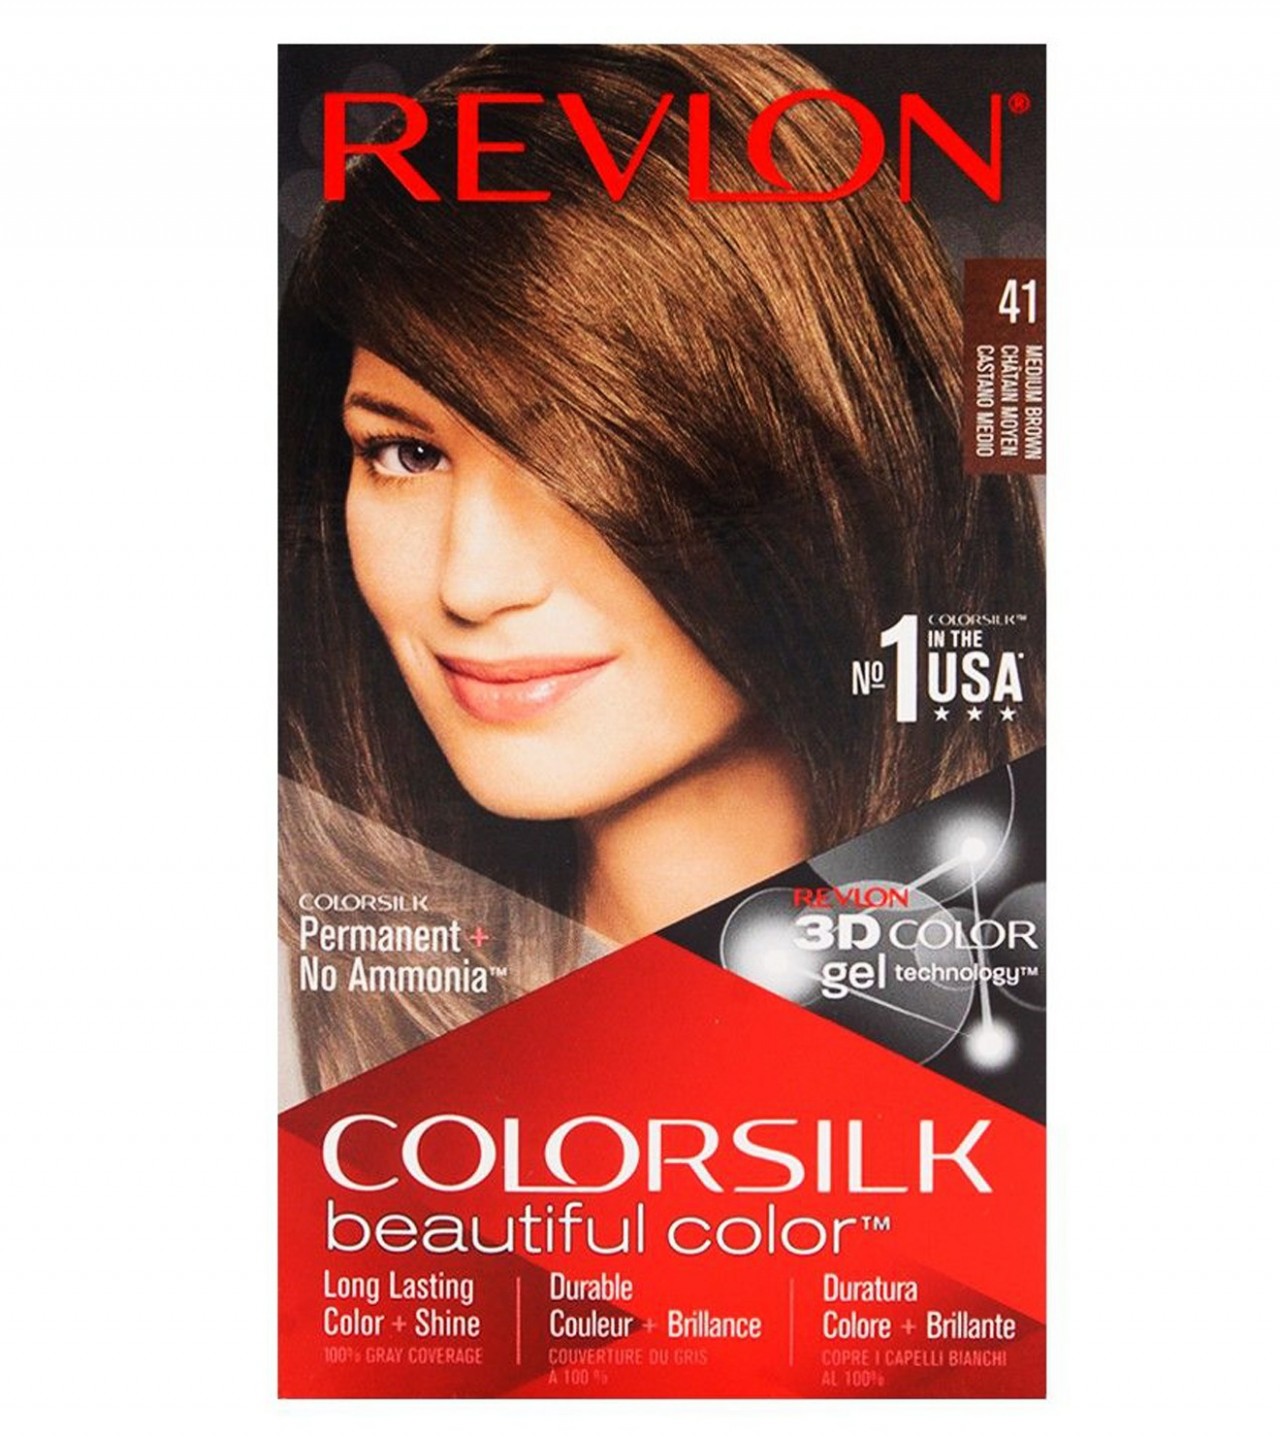 Revlon Color Silk Medium Brown Hair Color for Unisex - No. 41 - Medium Brown